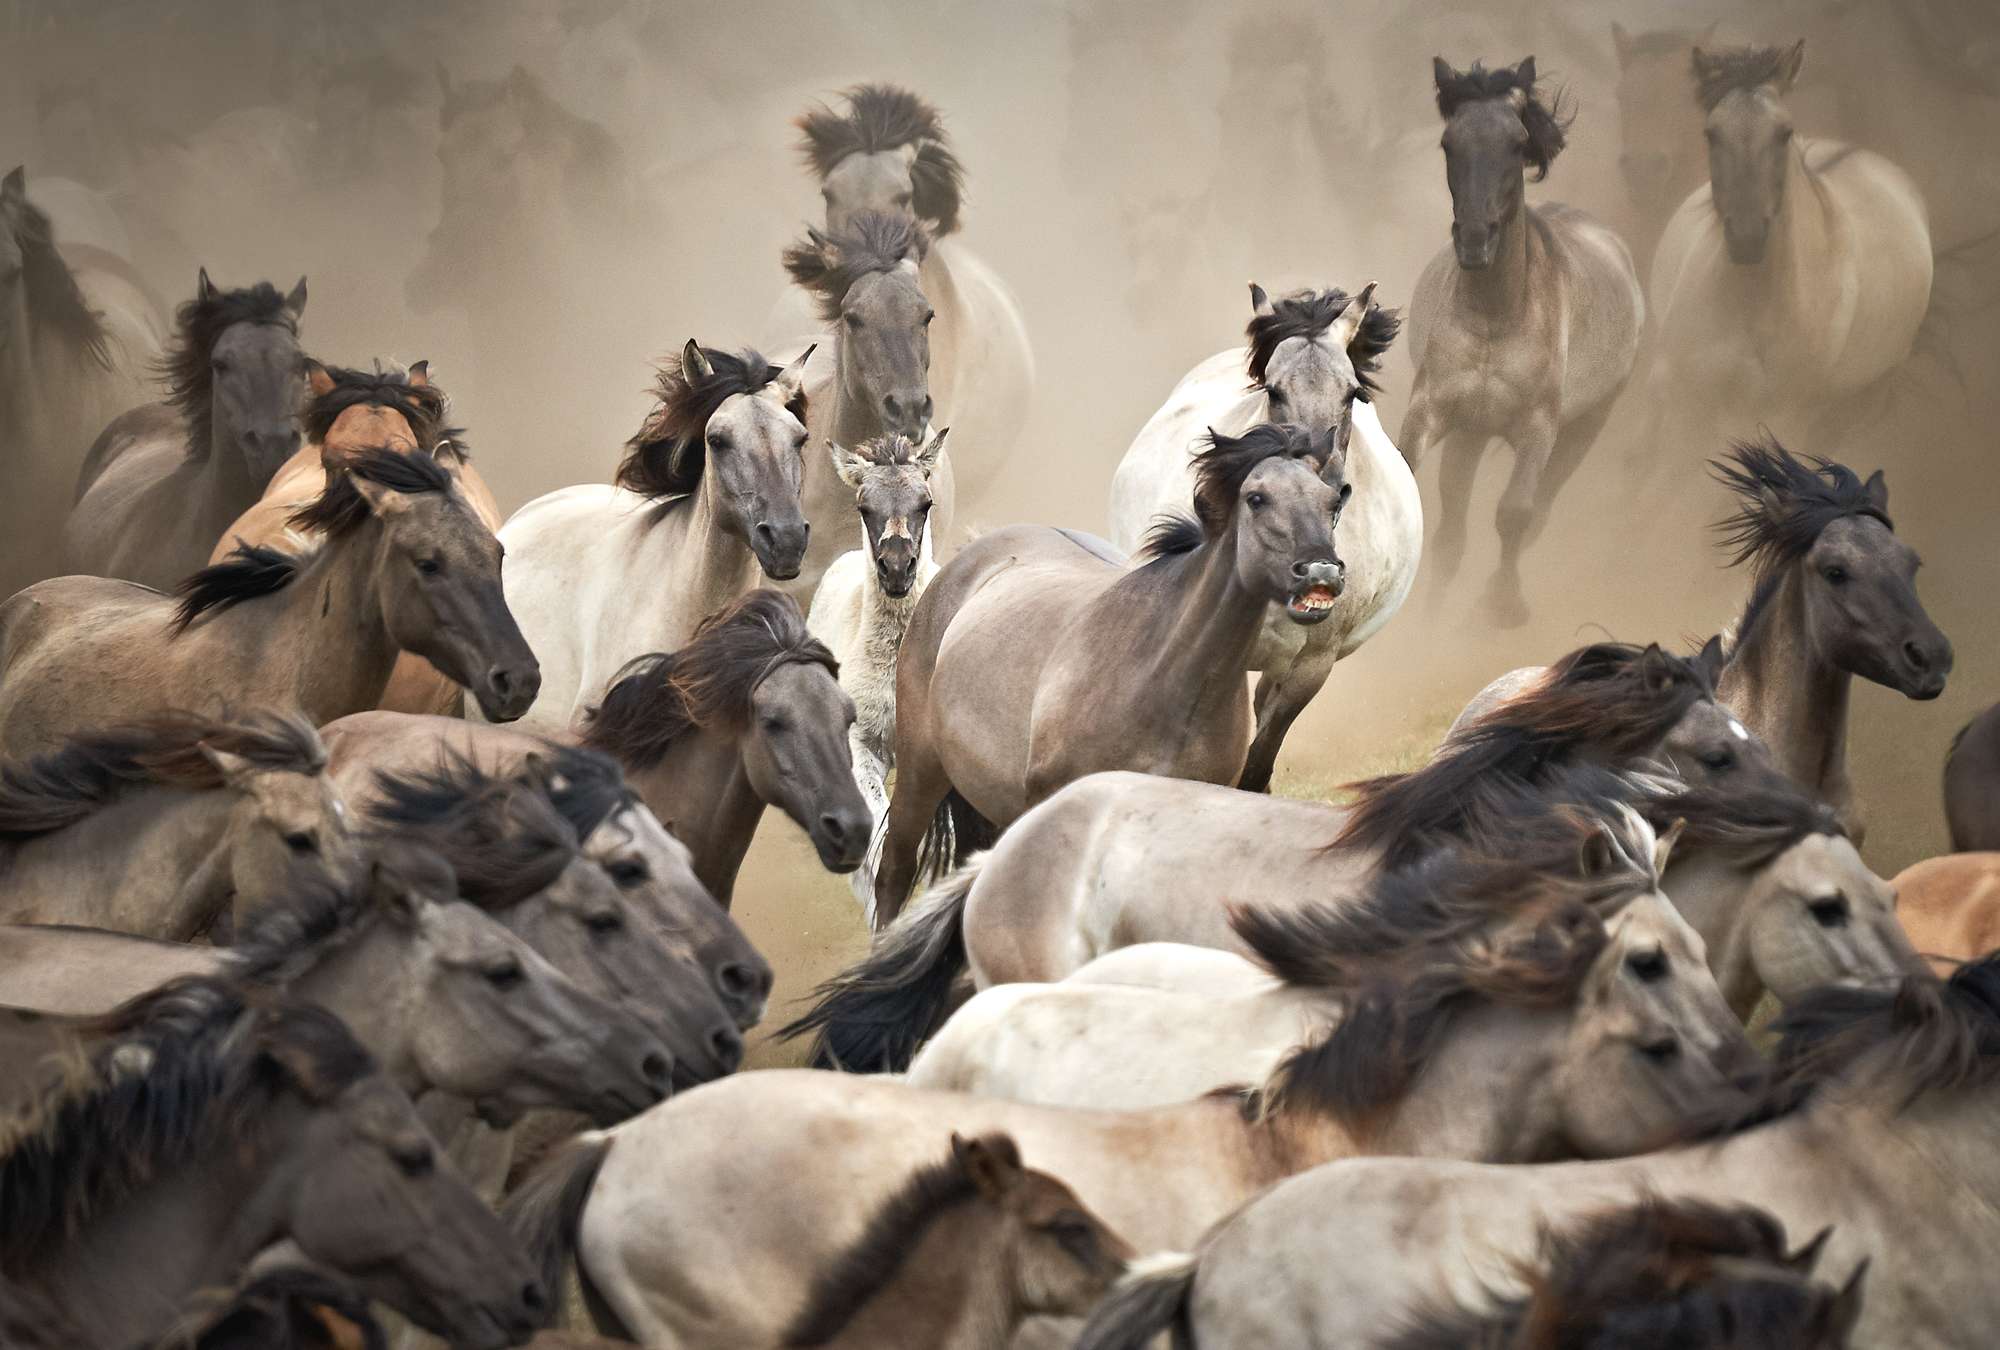             Photo wallpaper galloping wild horses - mustangs
        